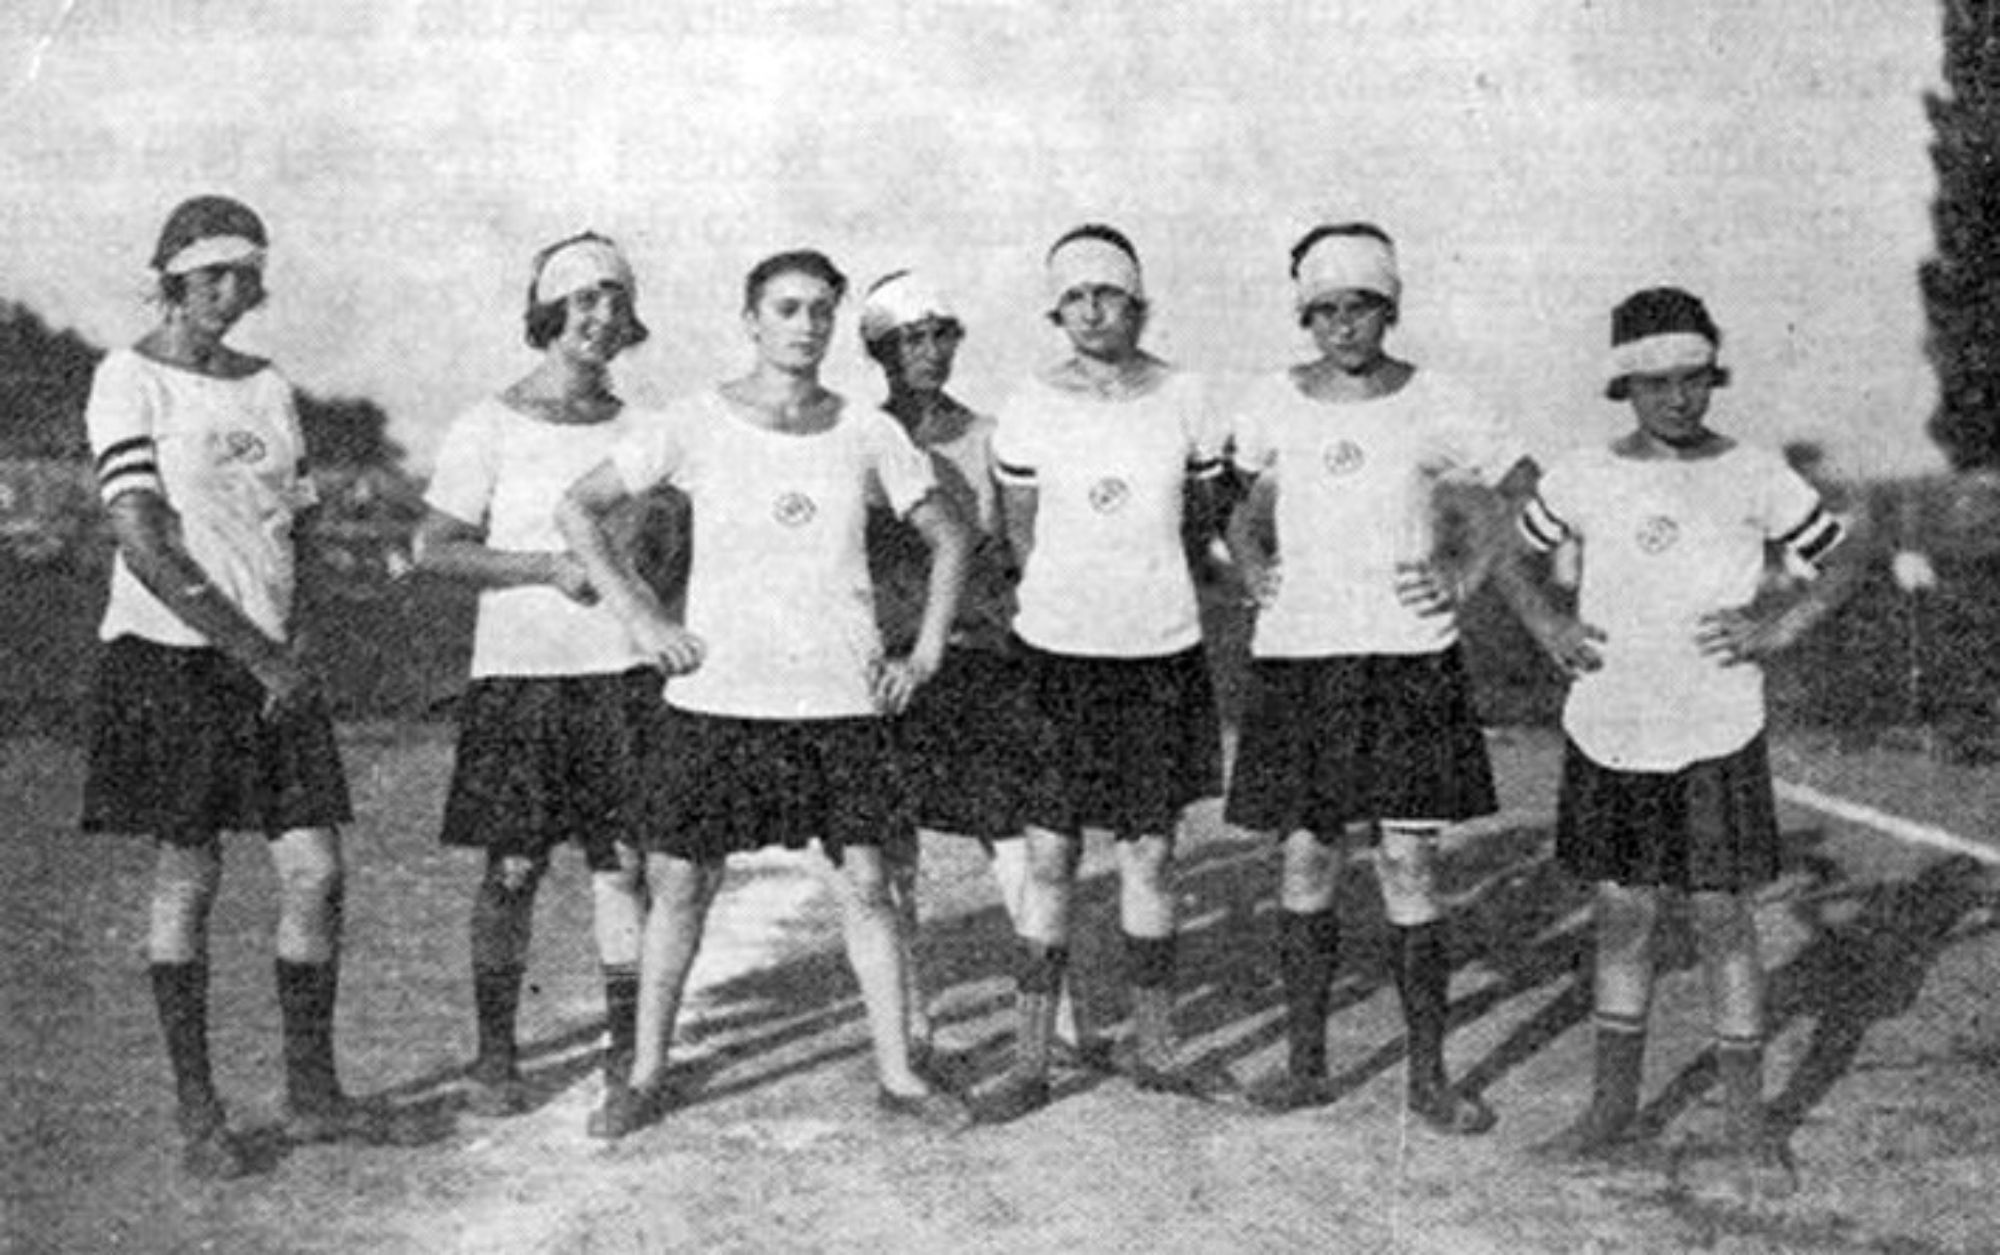 Prva javna utakmica u Zagrebu 30. 7. 1922. HA©K crvena i bijela